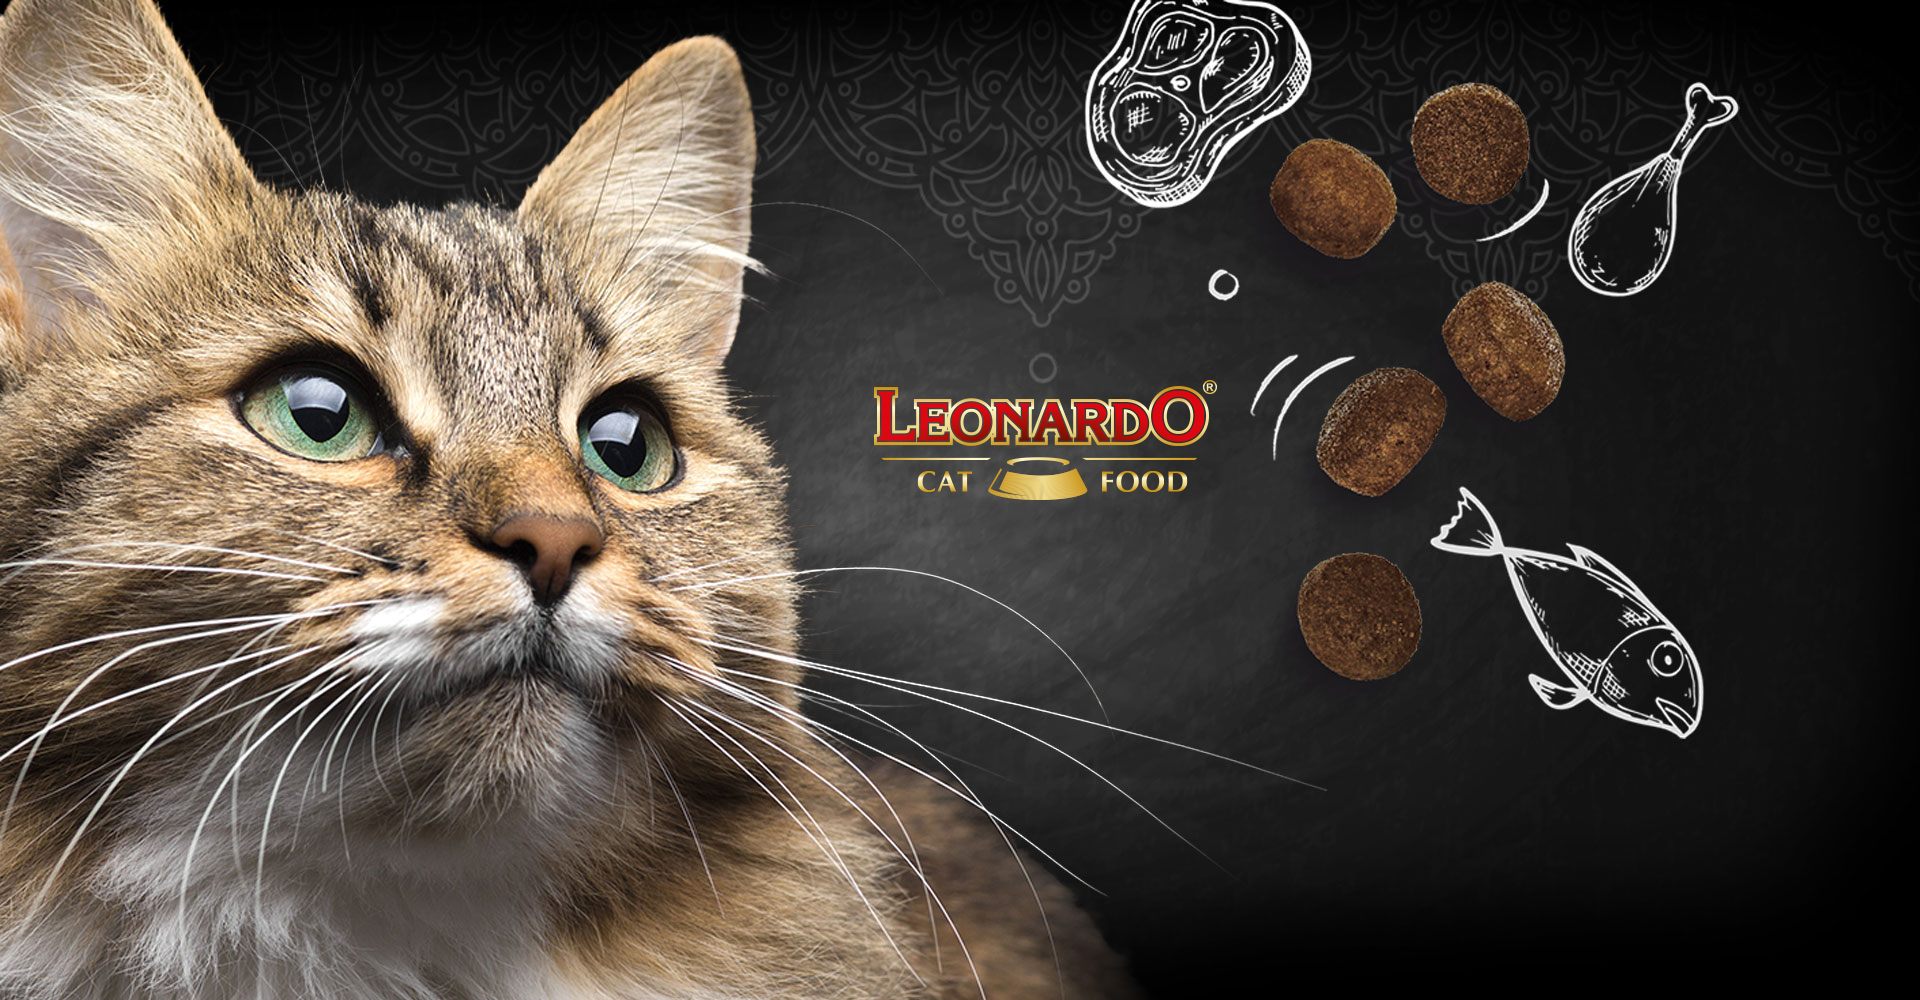 LEONARDO catfood Katzenfutter